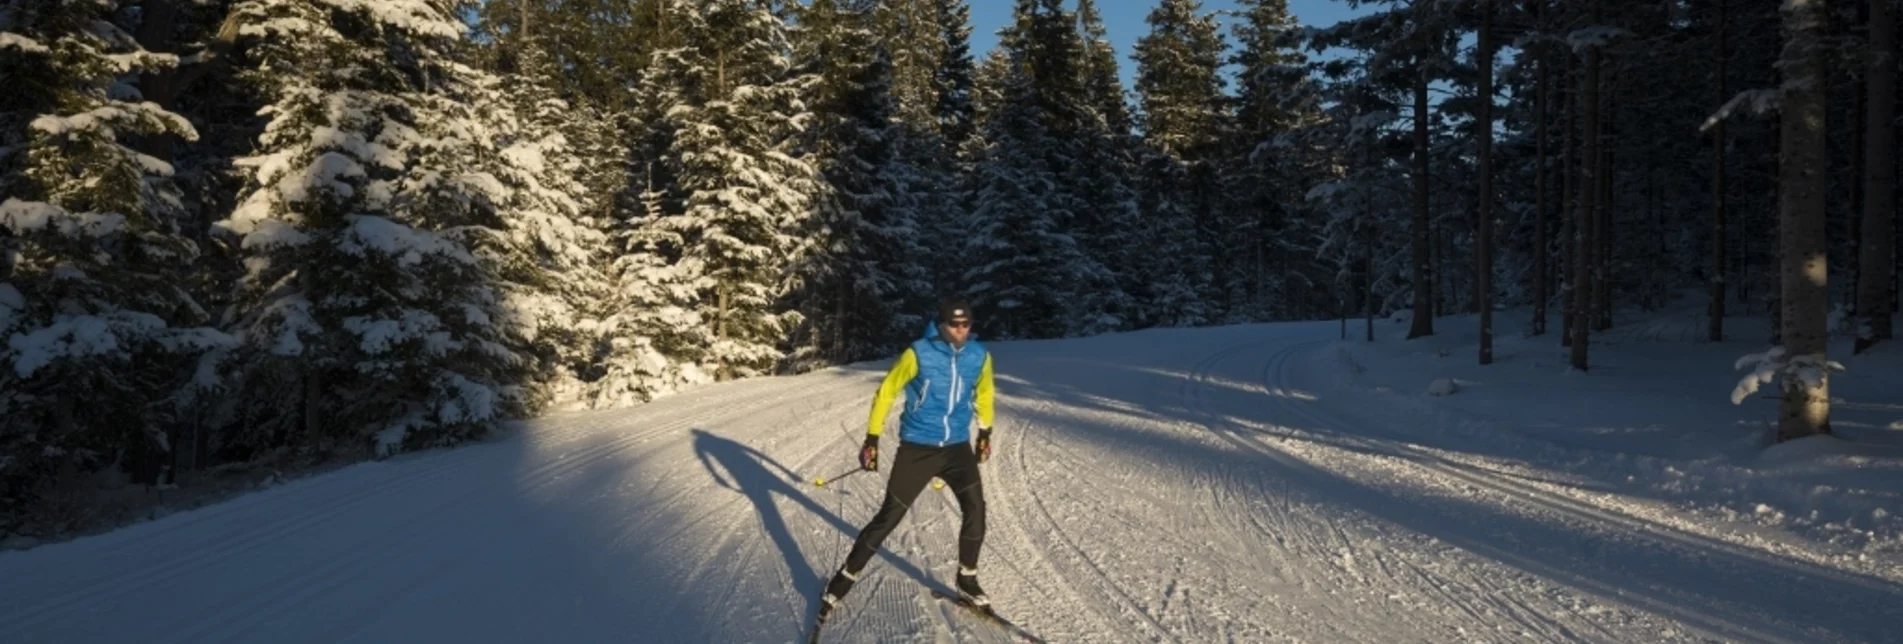 Cross-Country Skiing Sport trail VII Joglland trail - Touren-Impression #1 | © GH Orthofer